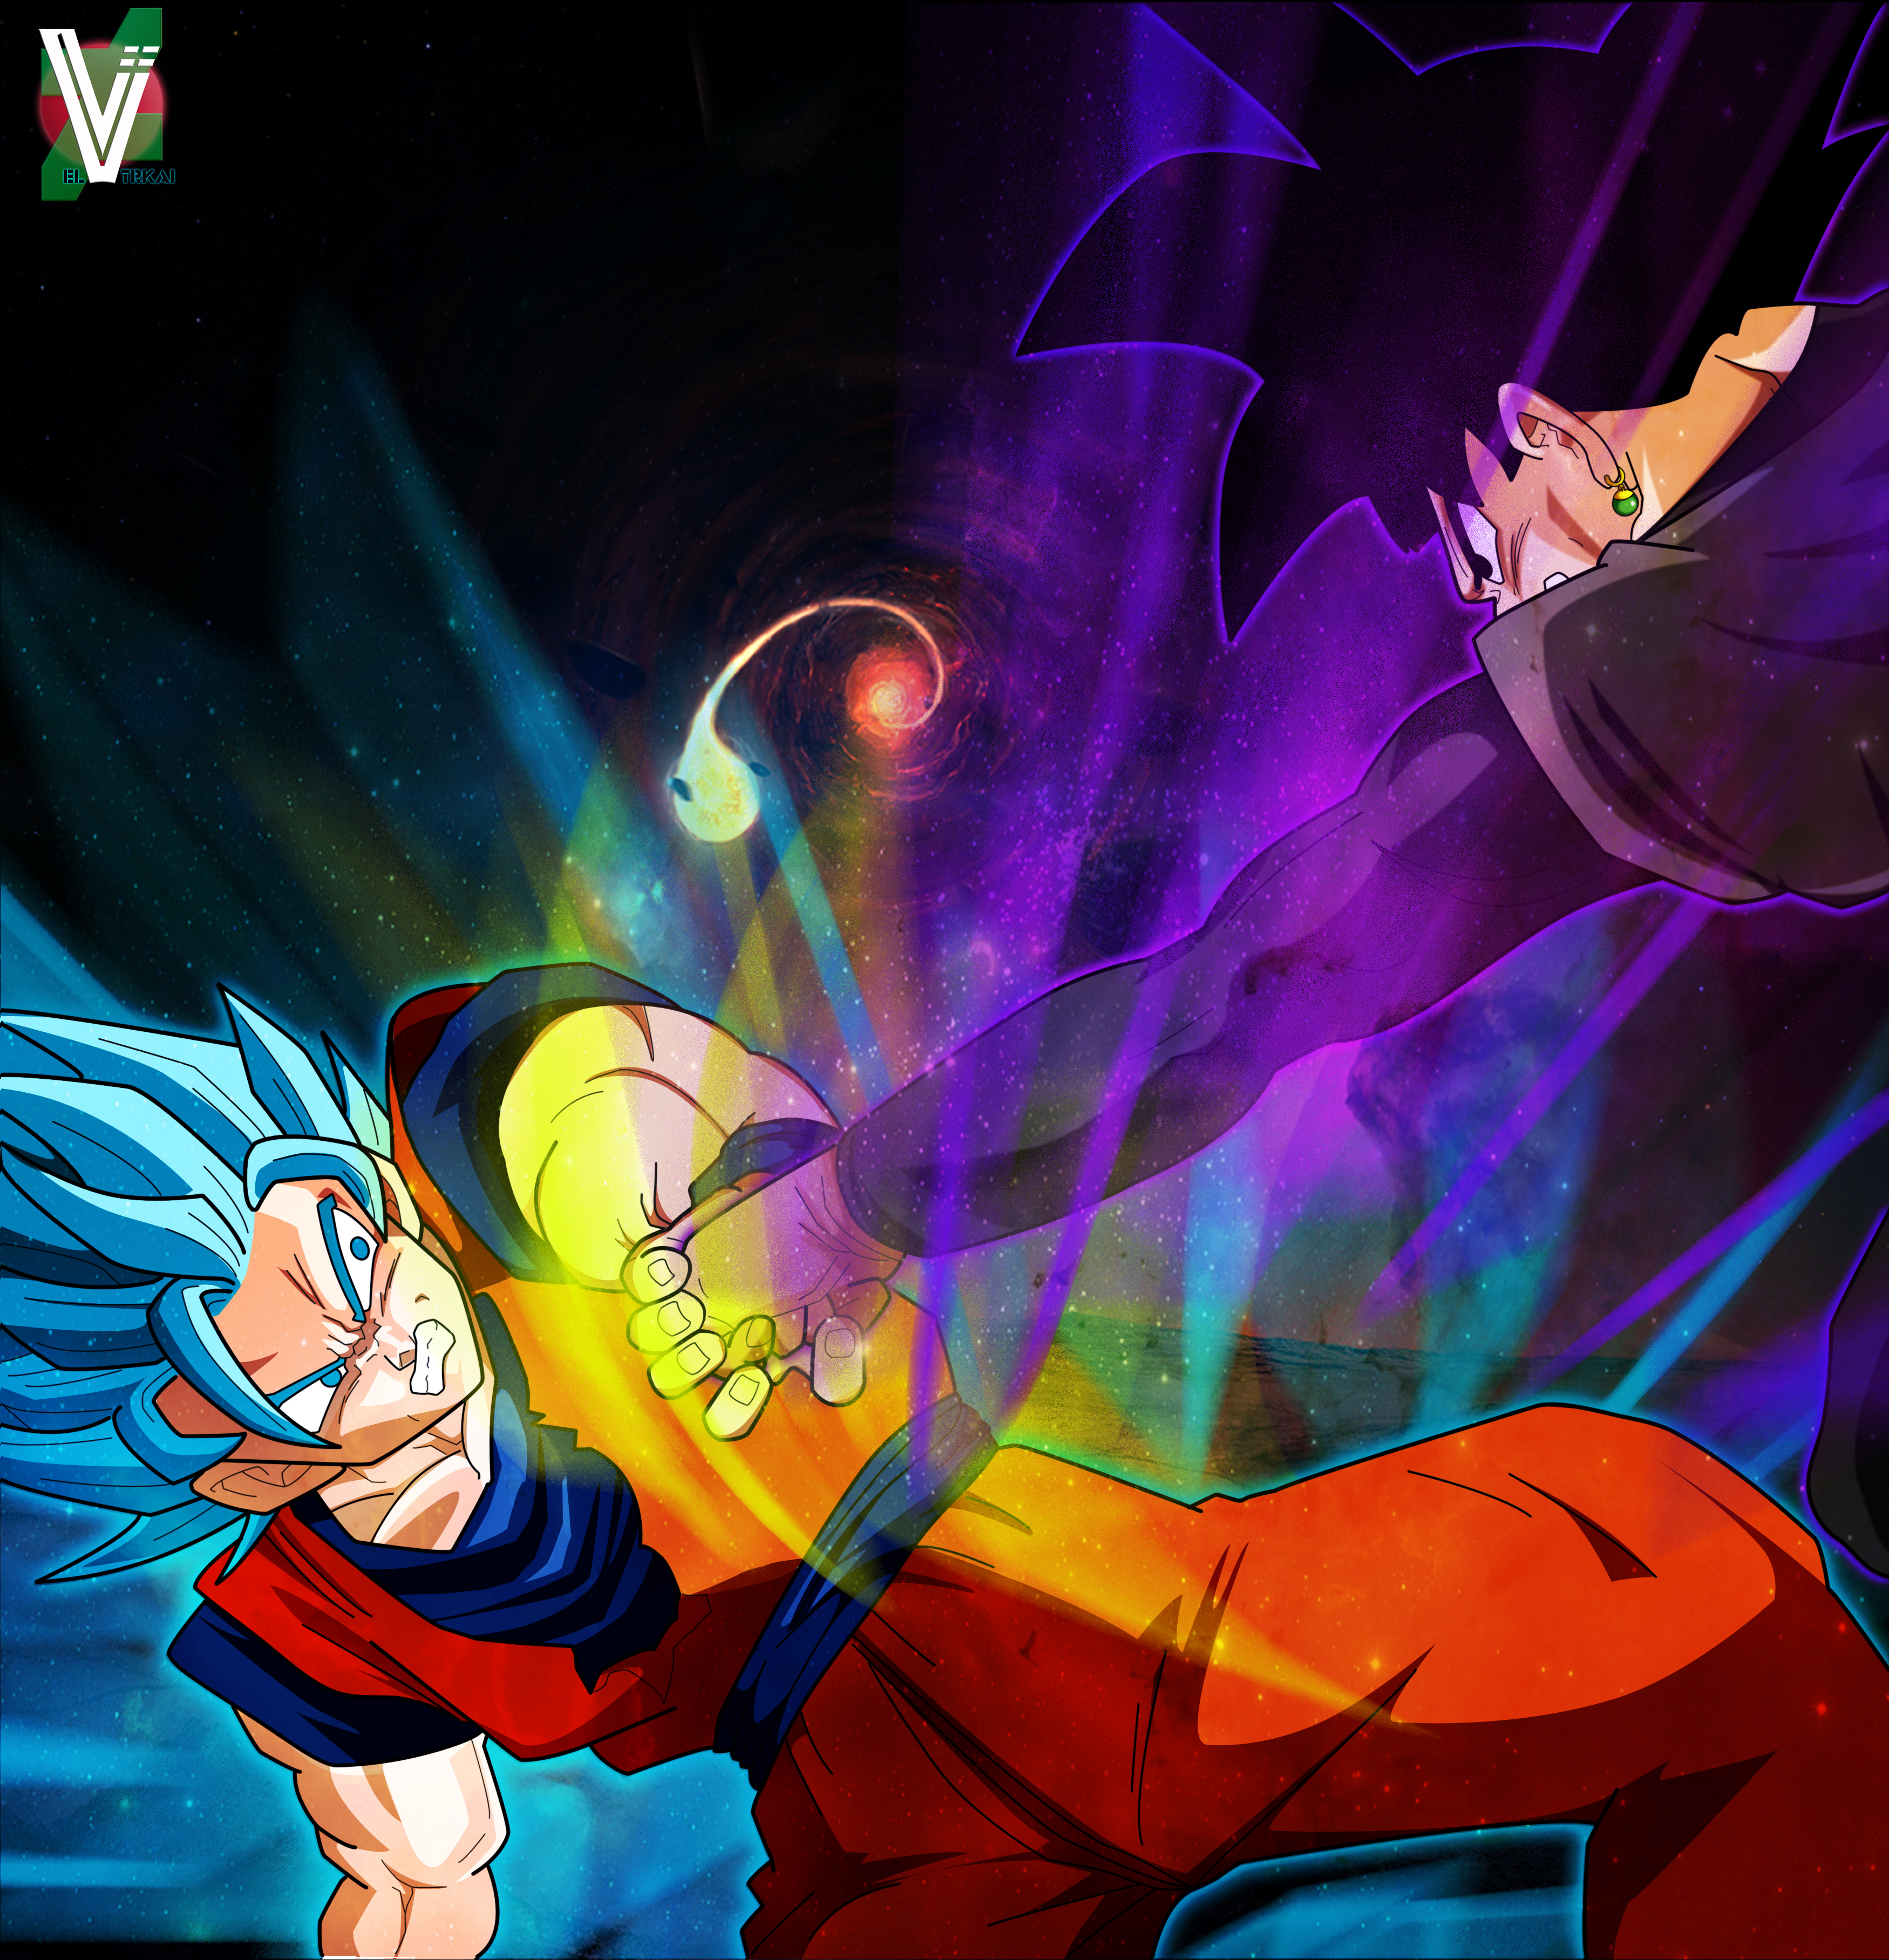 SSGSS Goku VS Black by ElvtrKai